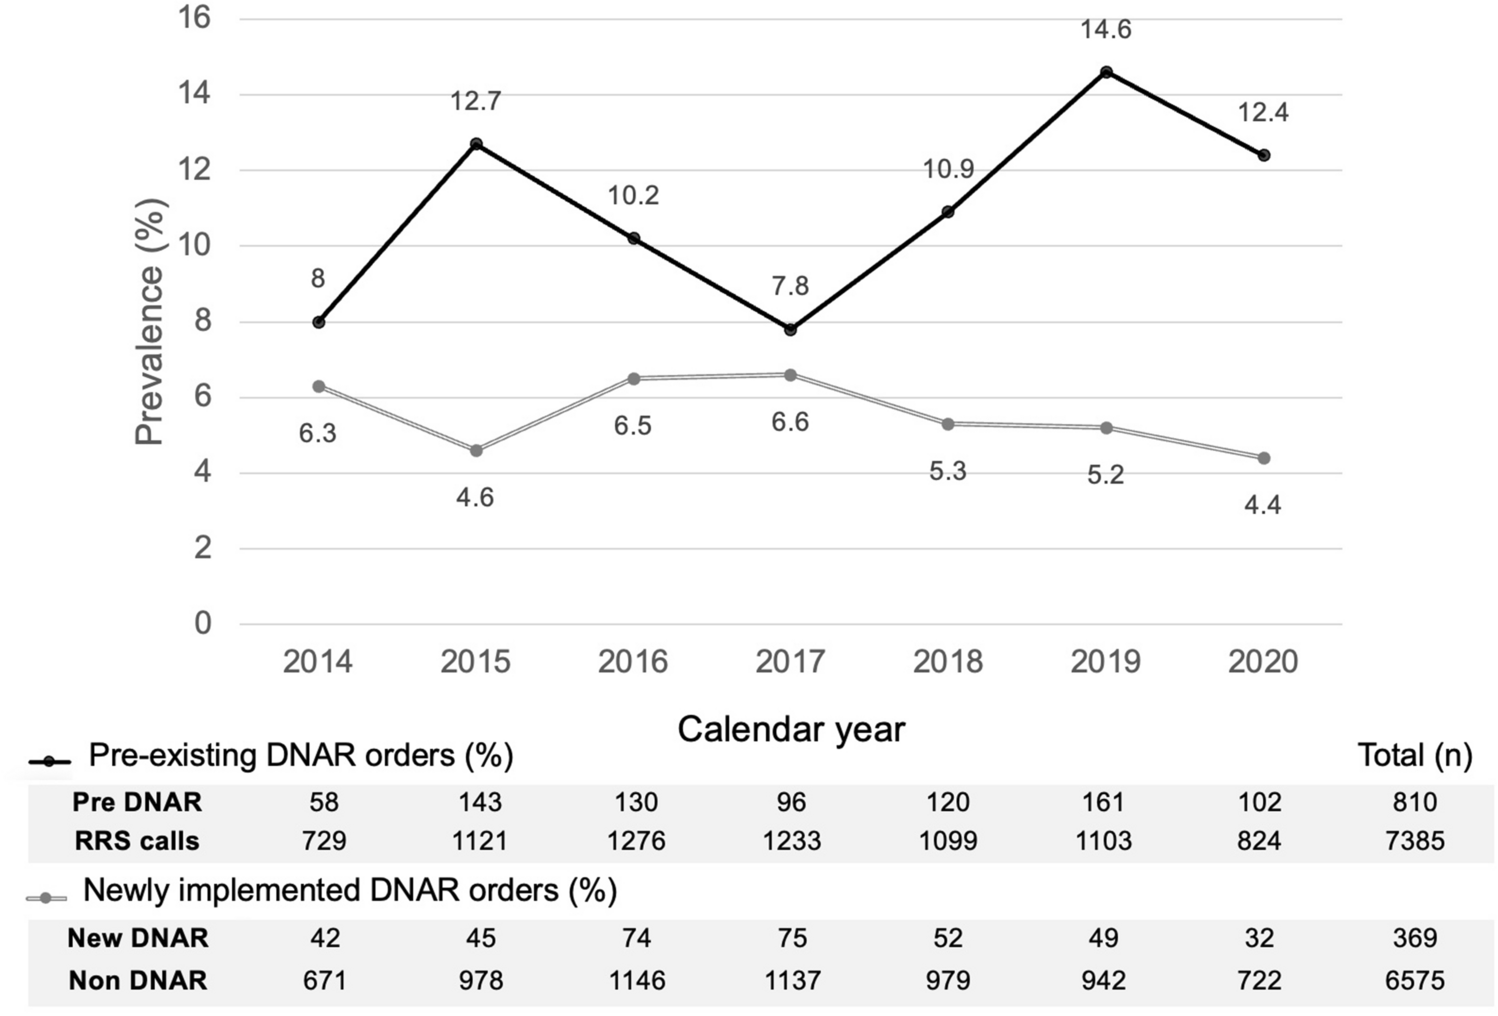 Trends in DNAR orders for deteriorating patients in Japan